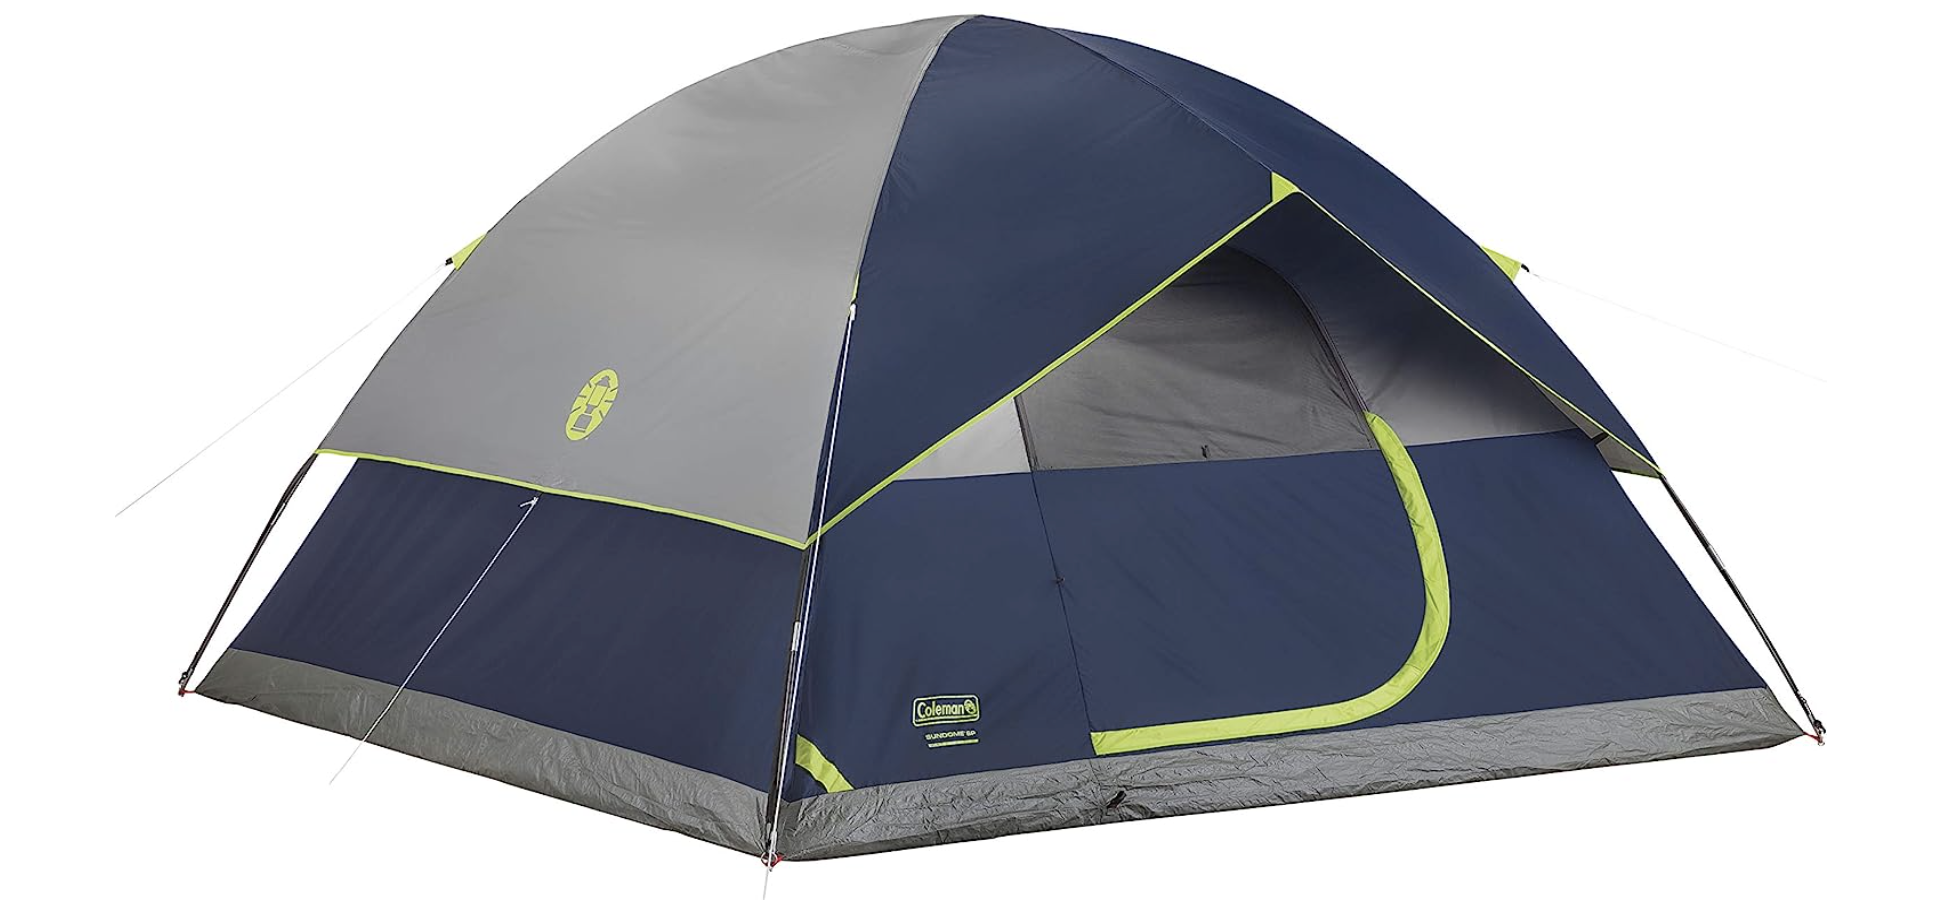 coleman 4-person sundome tent, best large family tent